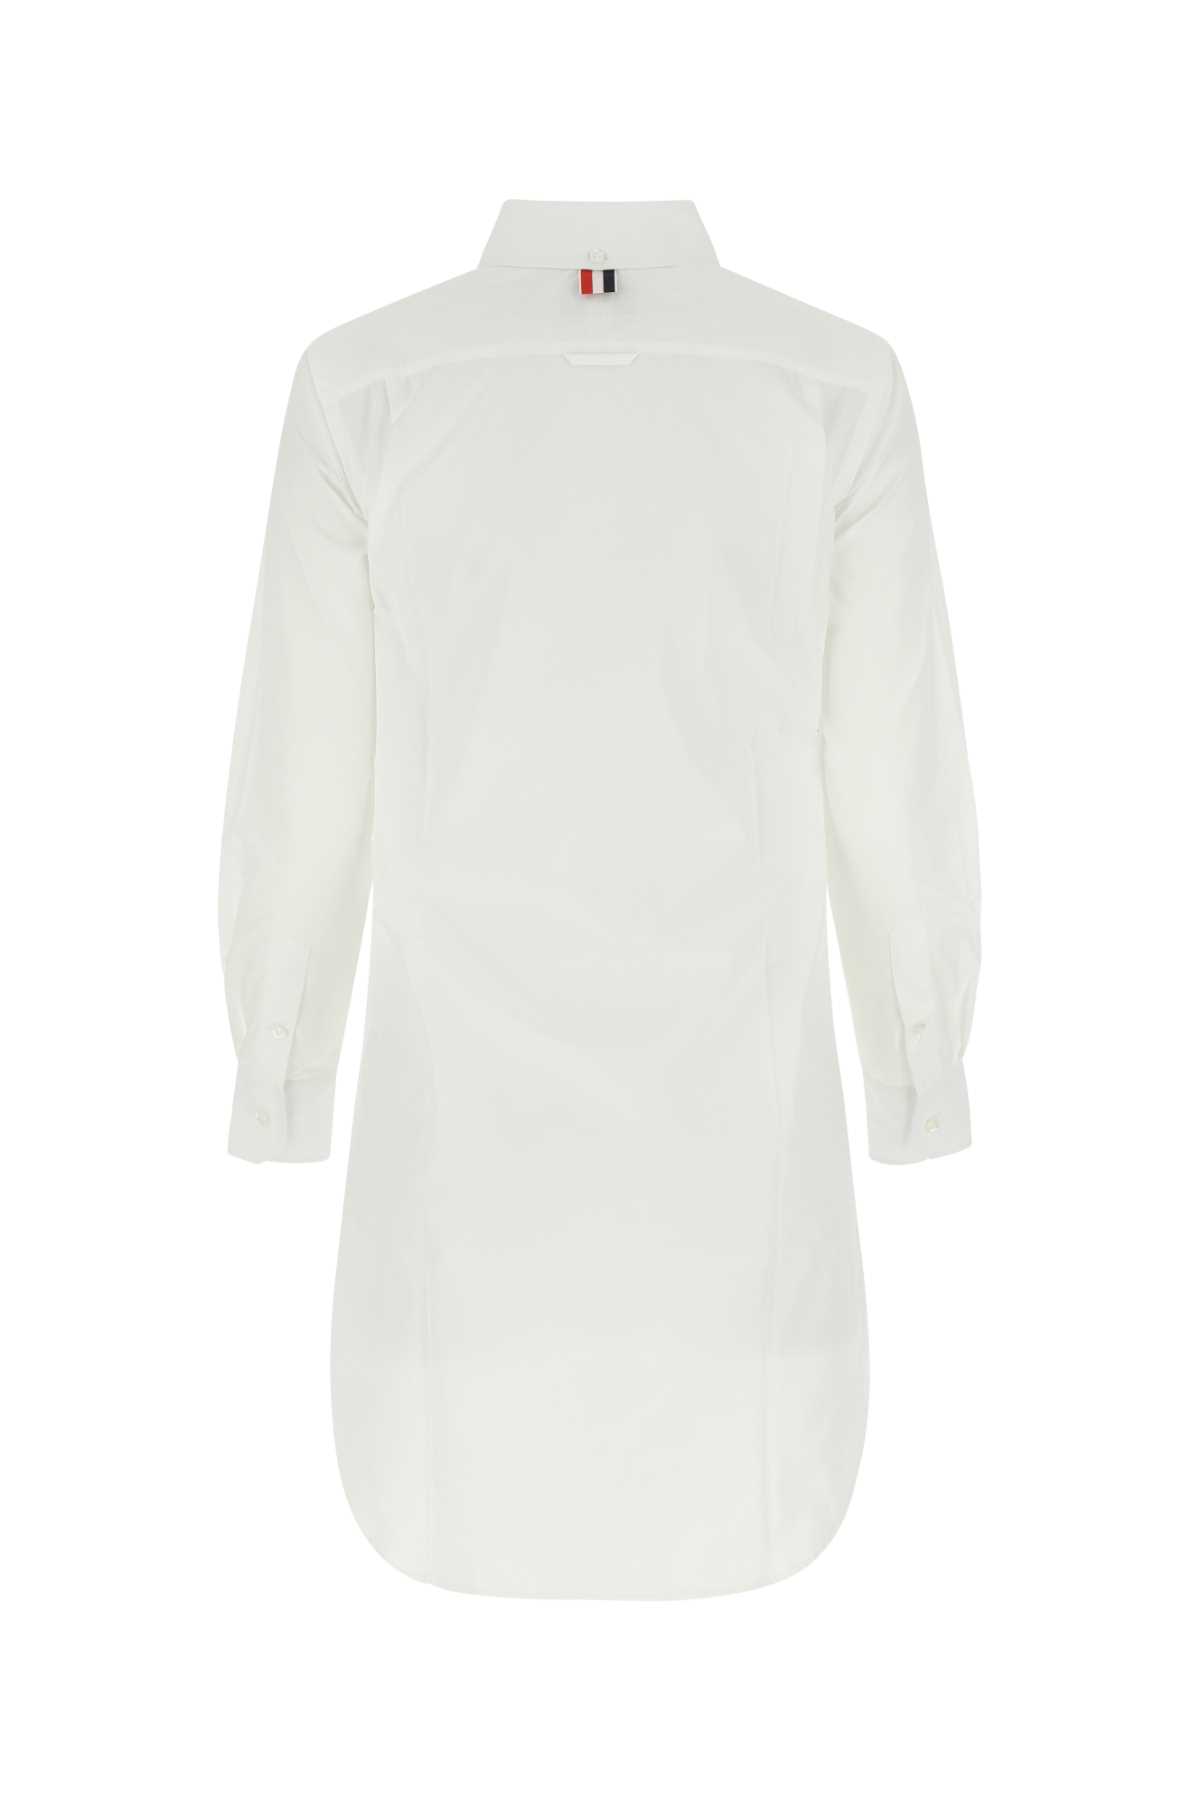 Thom Browne White Poplin Shirt Mini Dress In 100